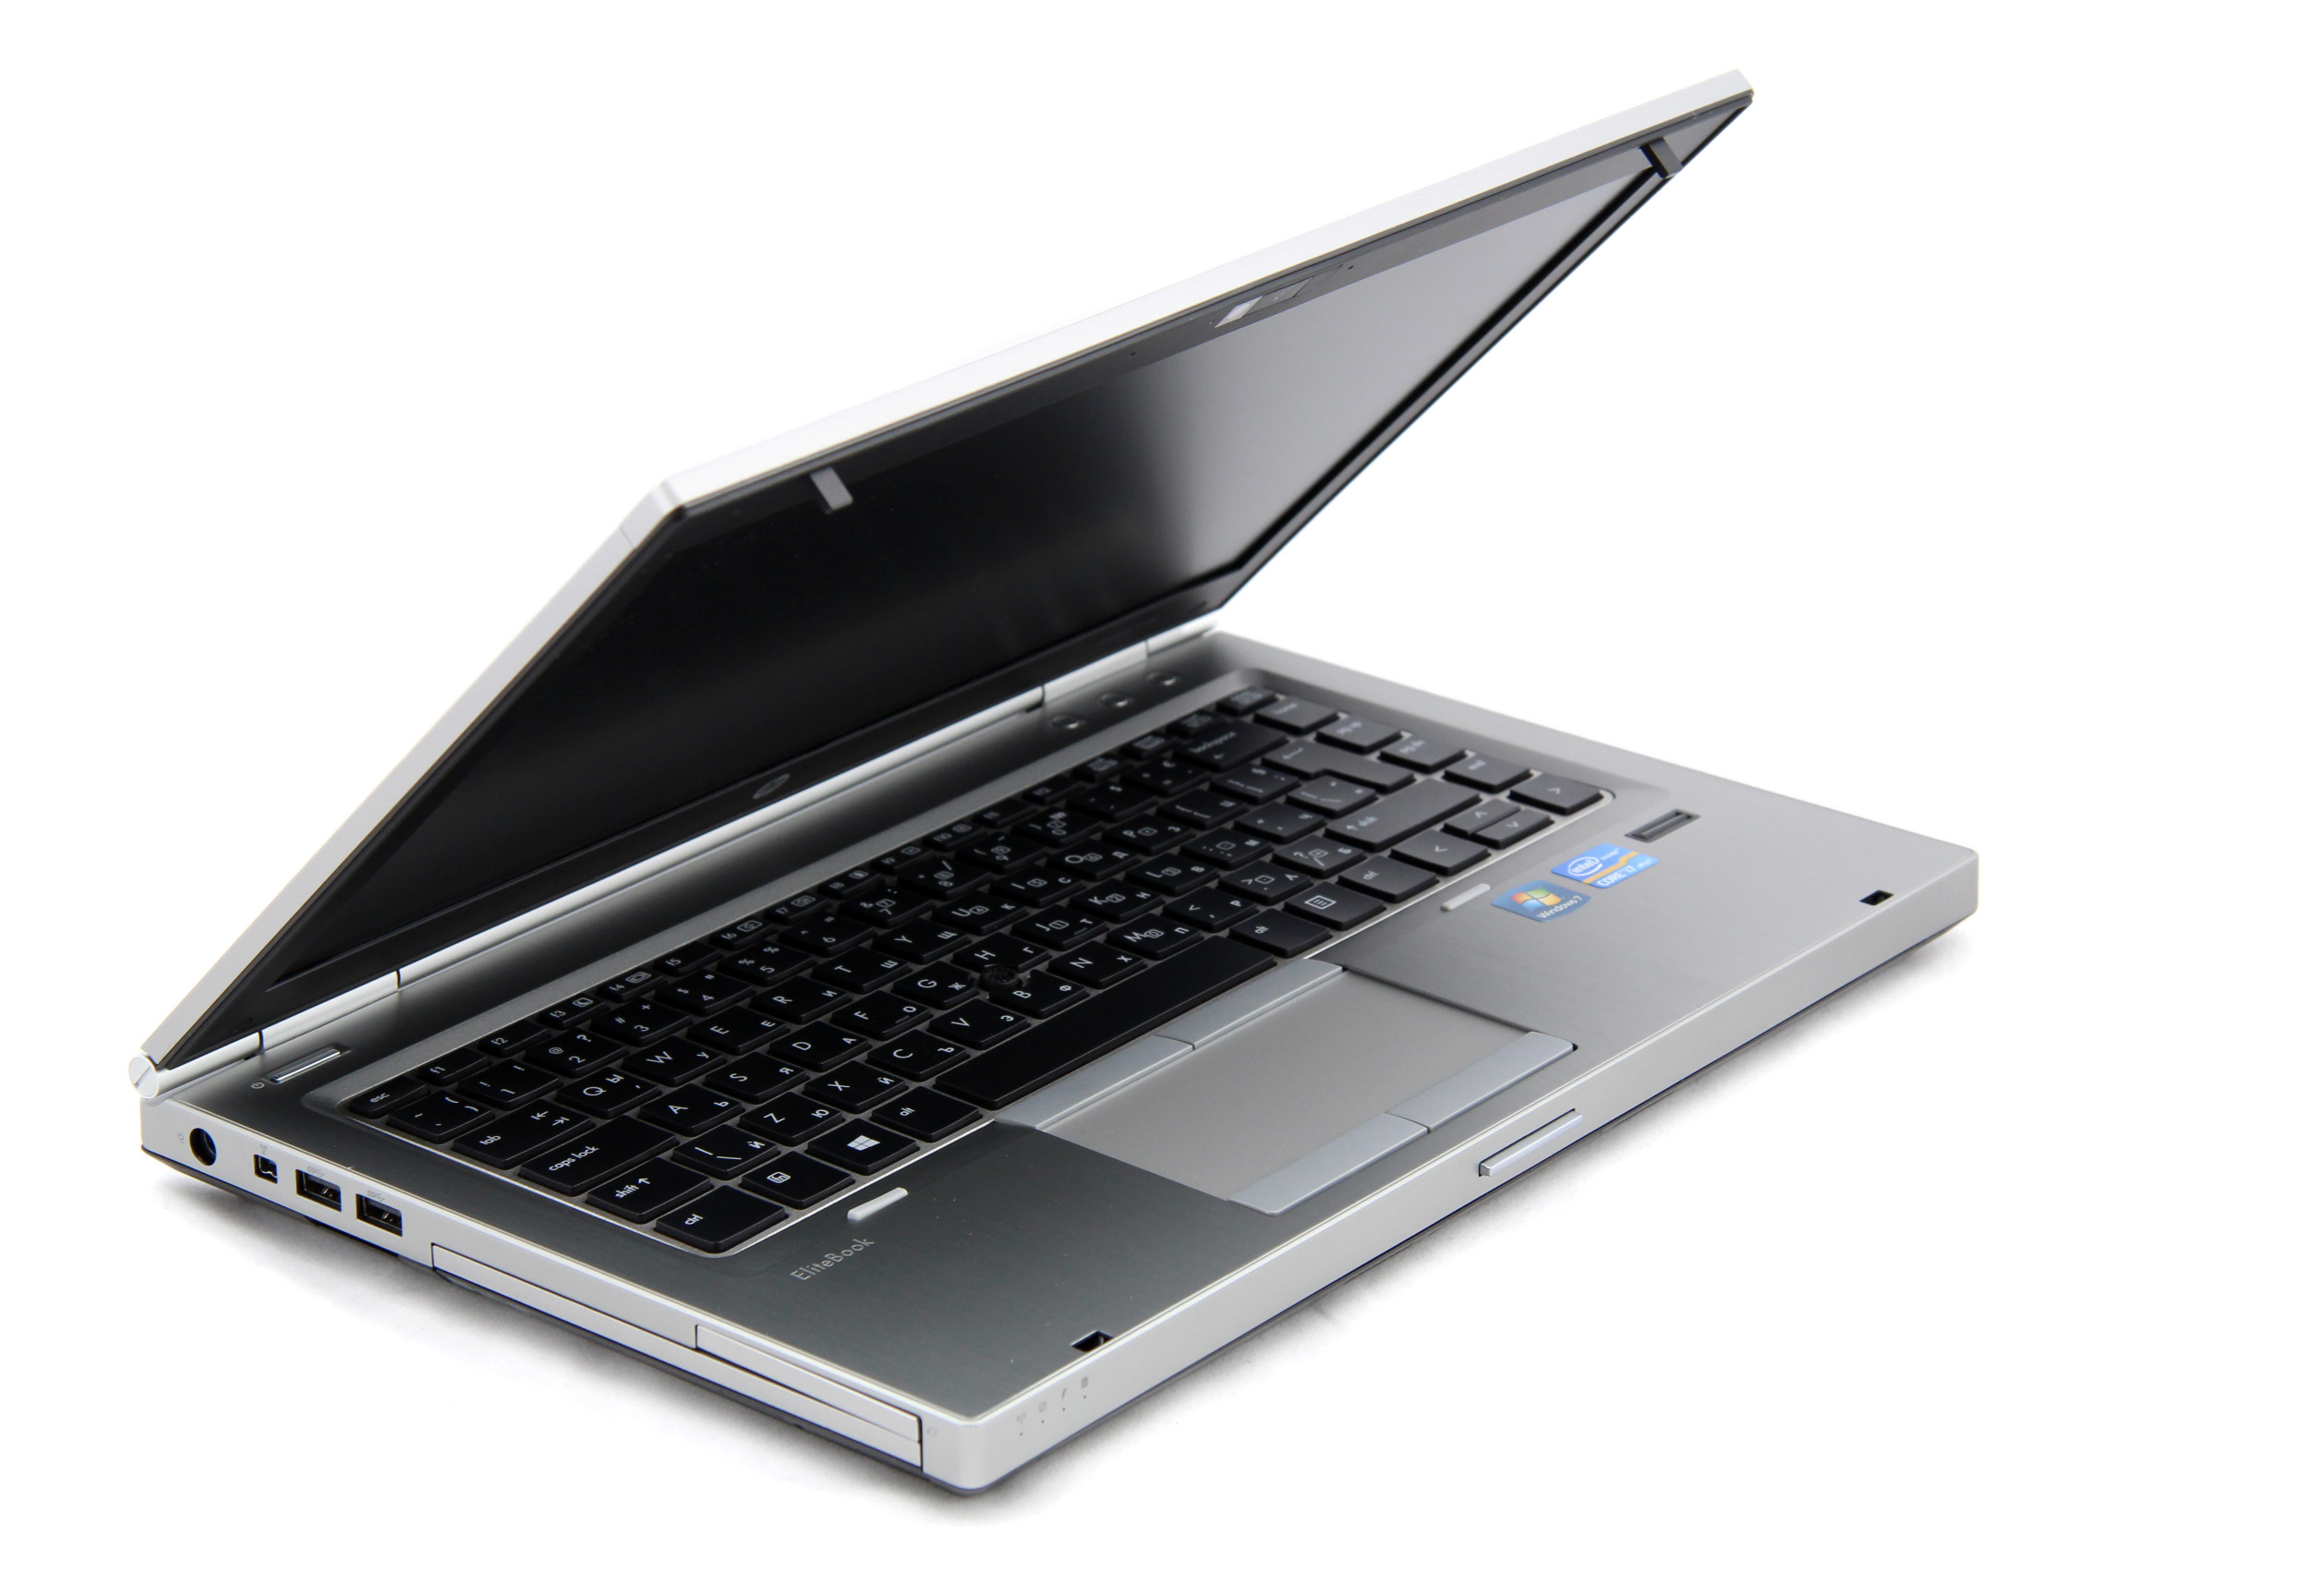 HP EliteBook 8470p 14" i7-3520M @ 2.9GHz, 8GB RAM, 320GB HDD, Windows 7 Professional - image 2 of 3